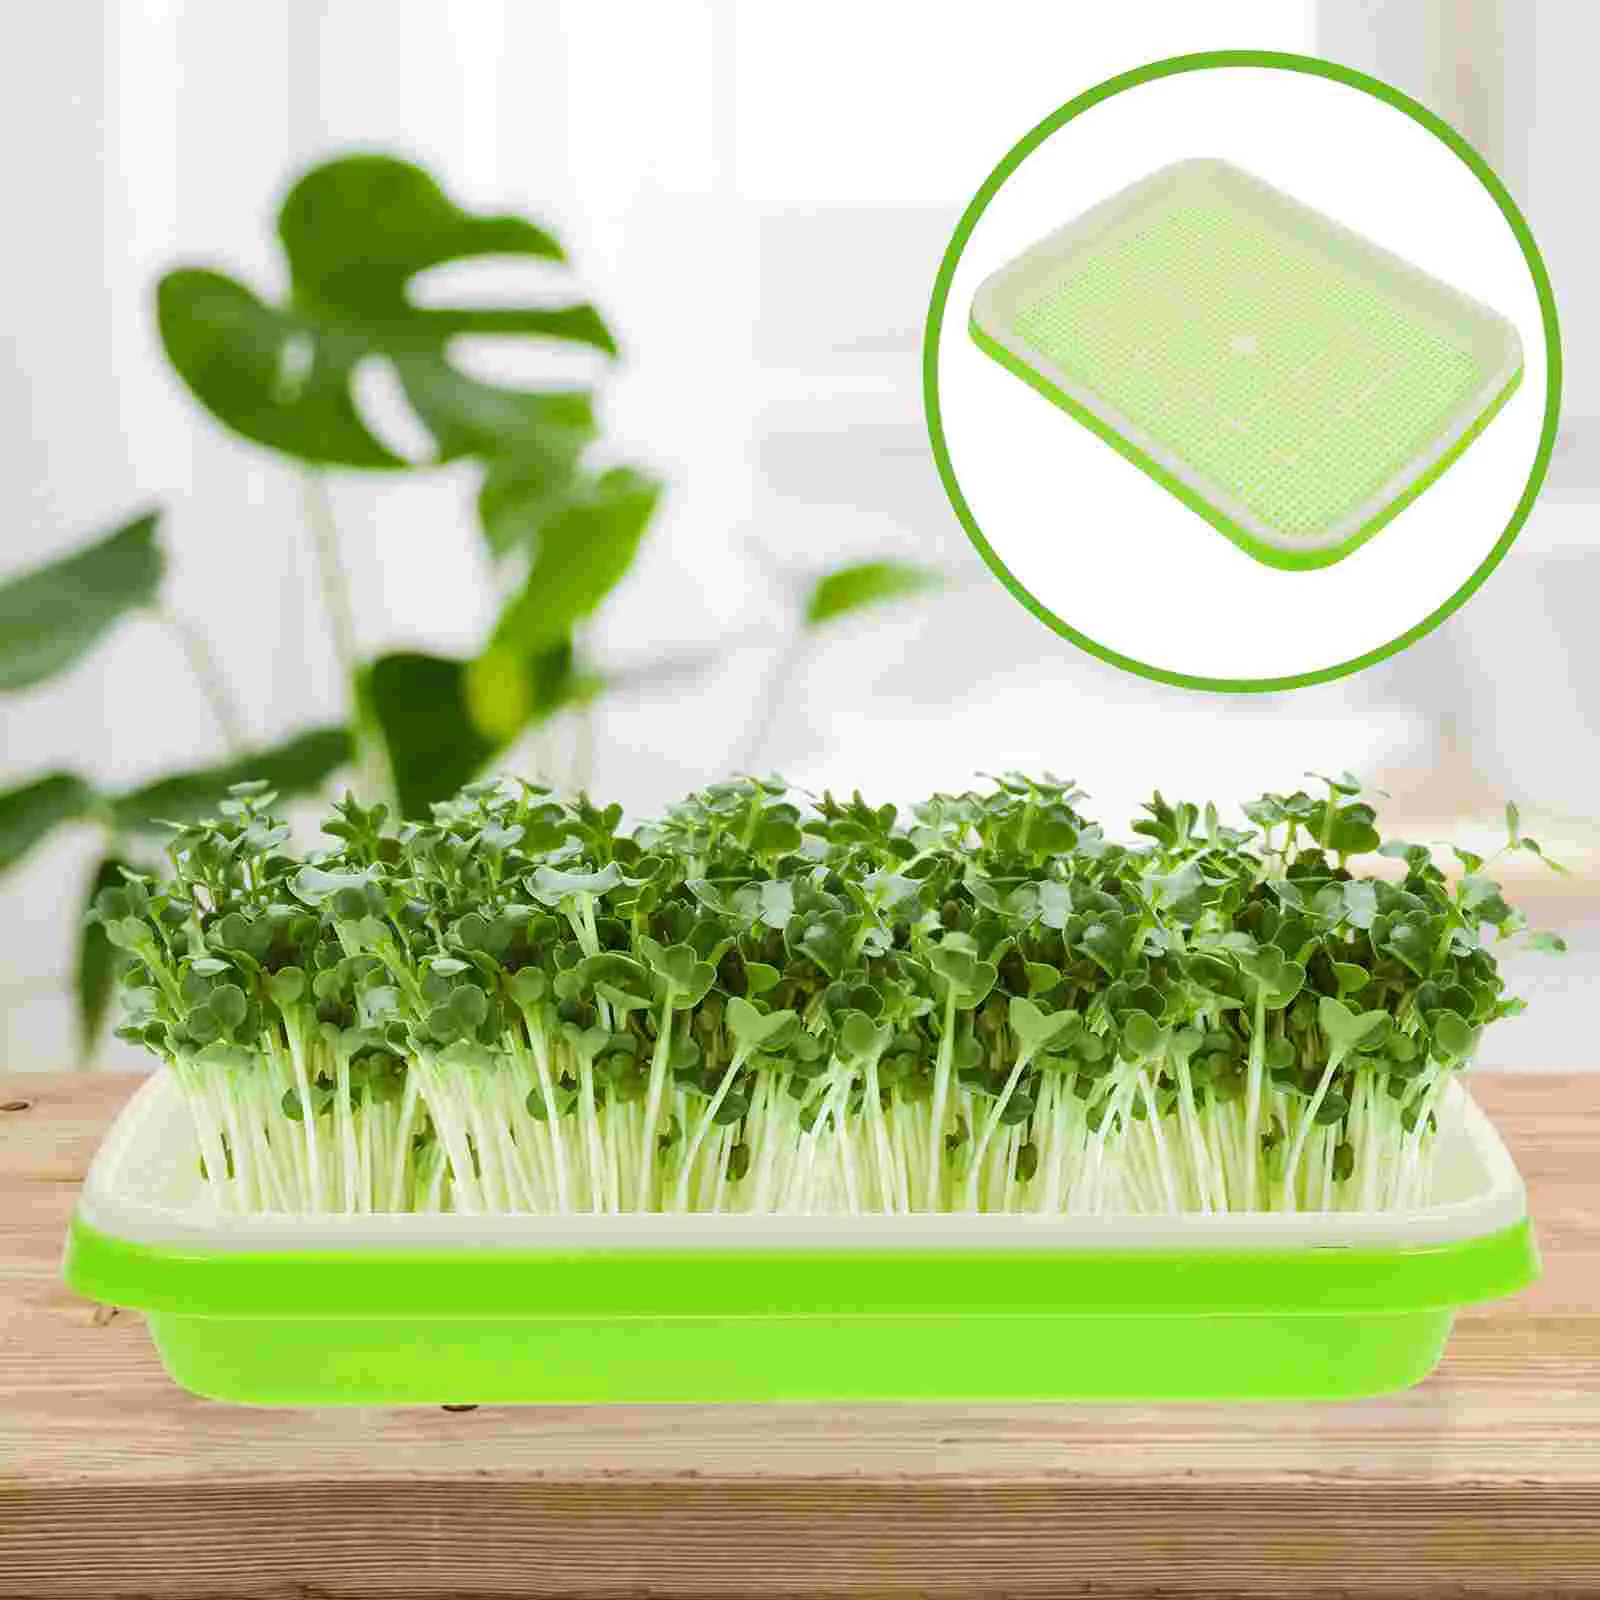 

3 Pcs Germination Tray Premium Nursery Bean Sprout Garden Planter Vegetable Hydroponic Germinating Plastic